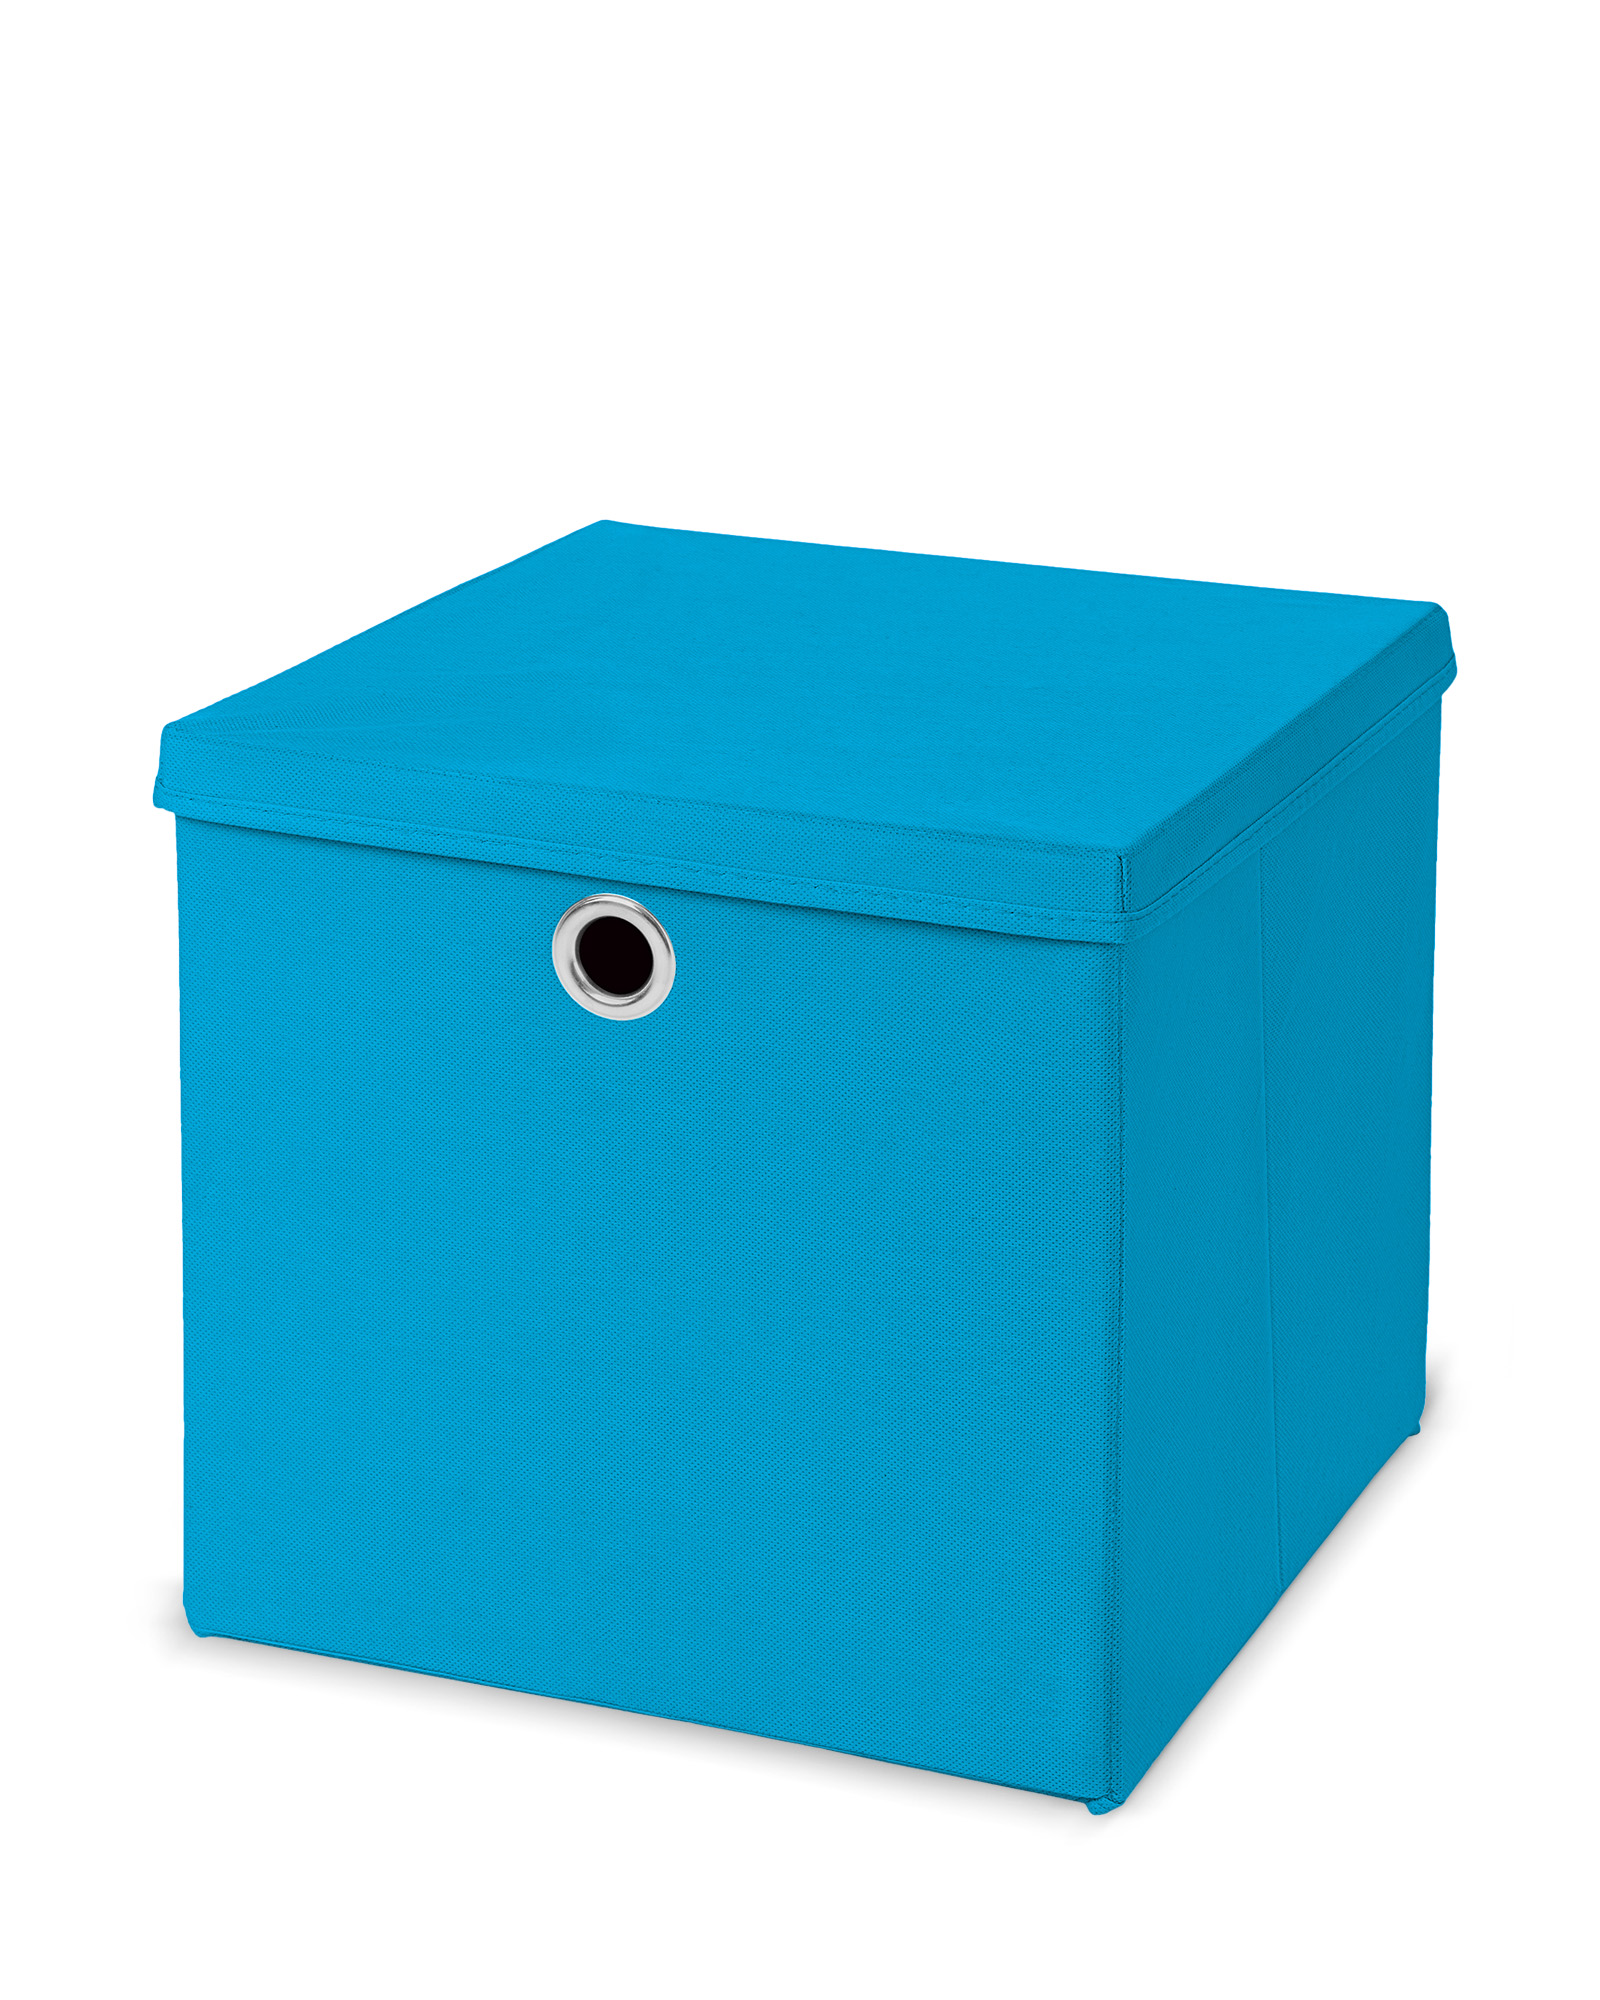 5 Stück Faltbox Blau 28 x 28 x 28 cm Aufbewahrungsbox faltbar mit Deckel